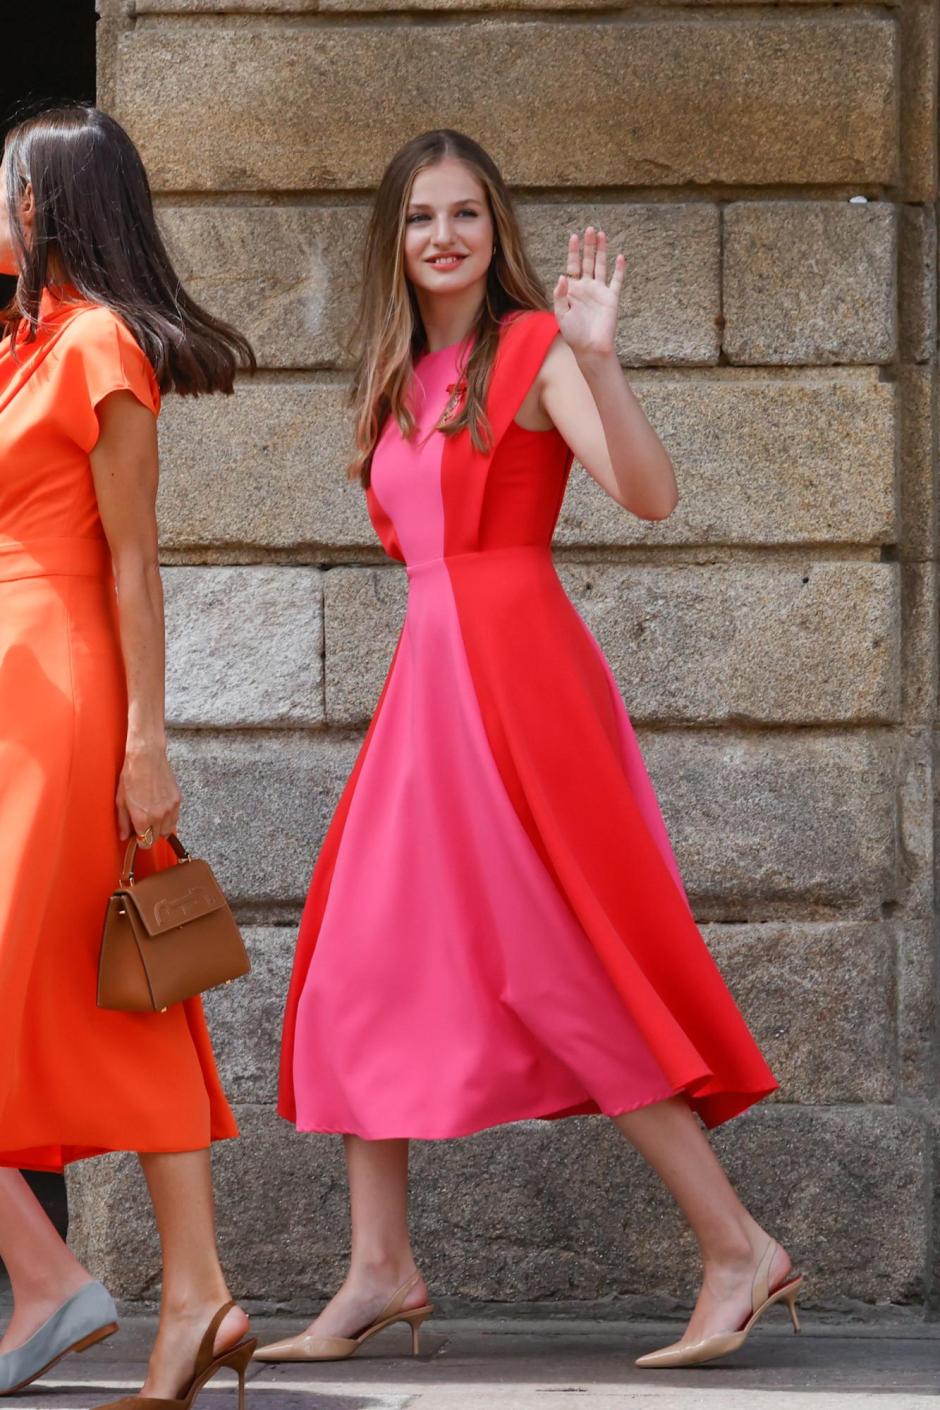 Princess of Asturias Leonor de Borbon during Santiago Apostle festivity act in Santiago de Compostela, A Coruña on Monday, 25 July 2022.